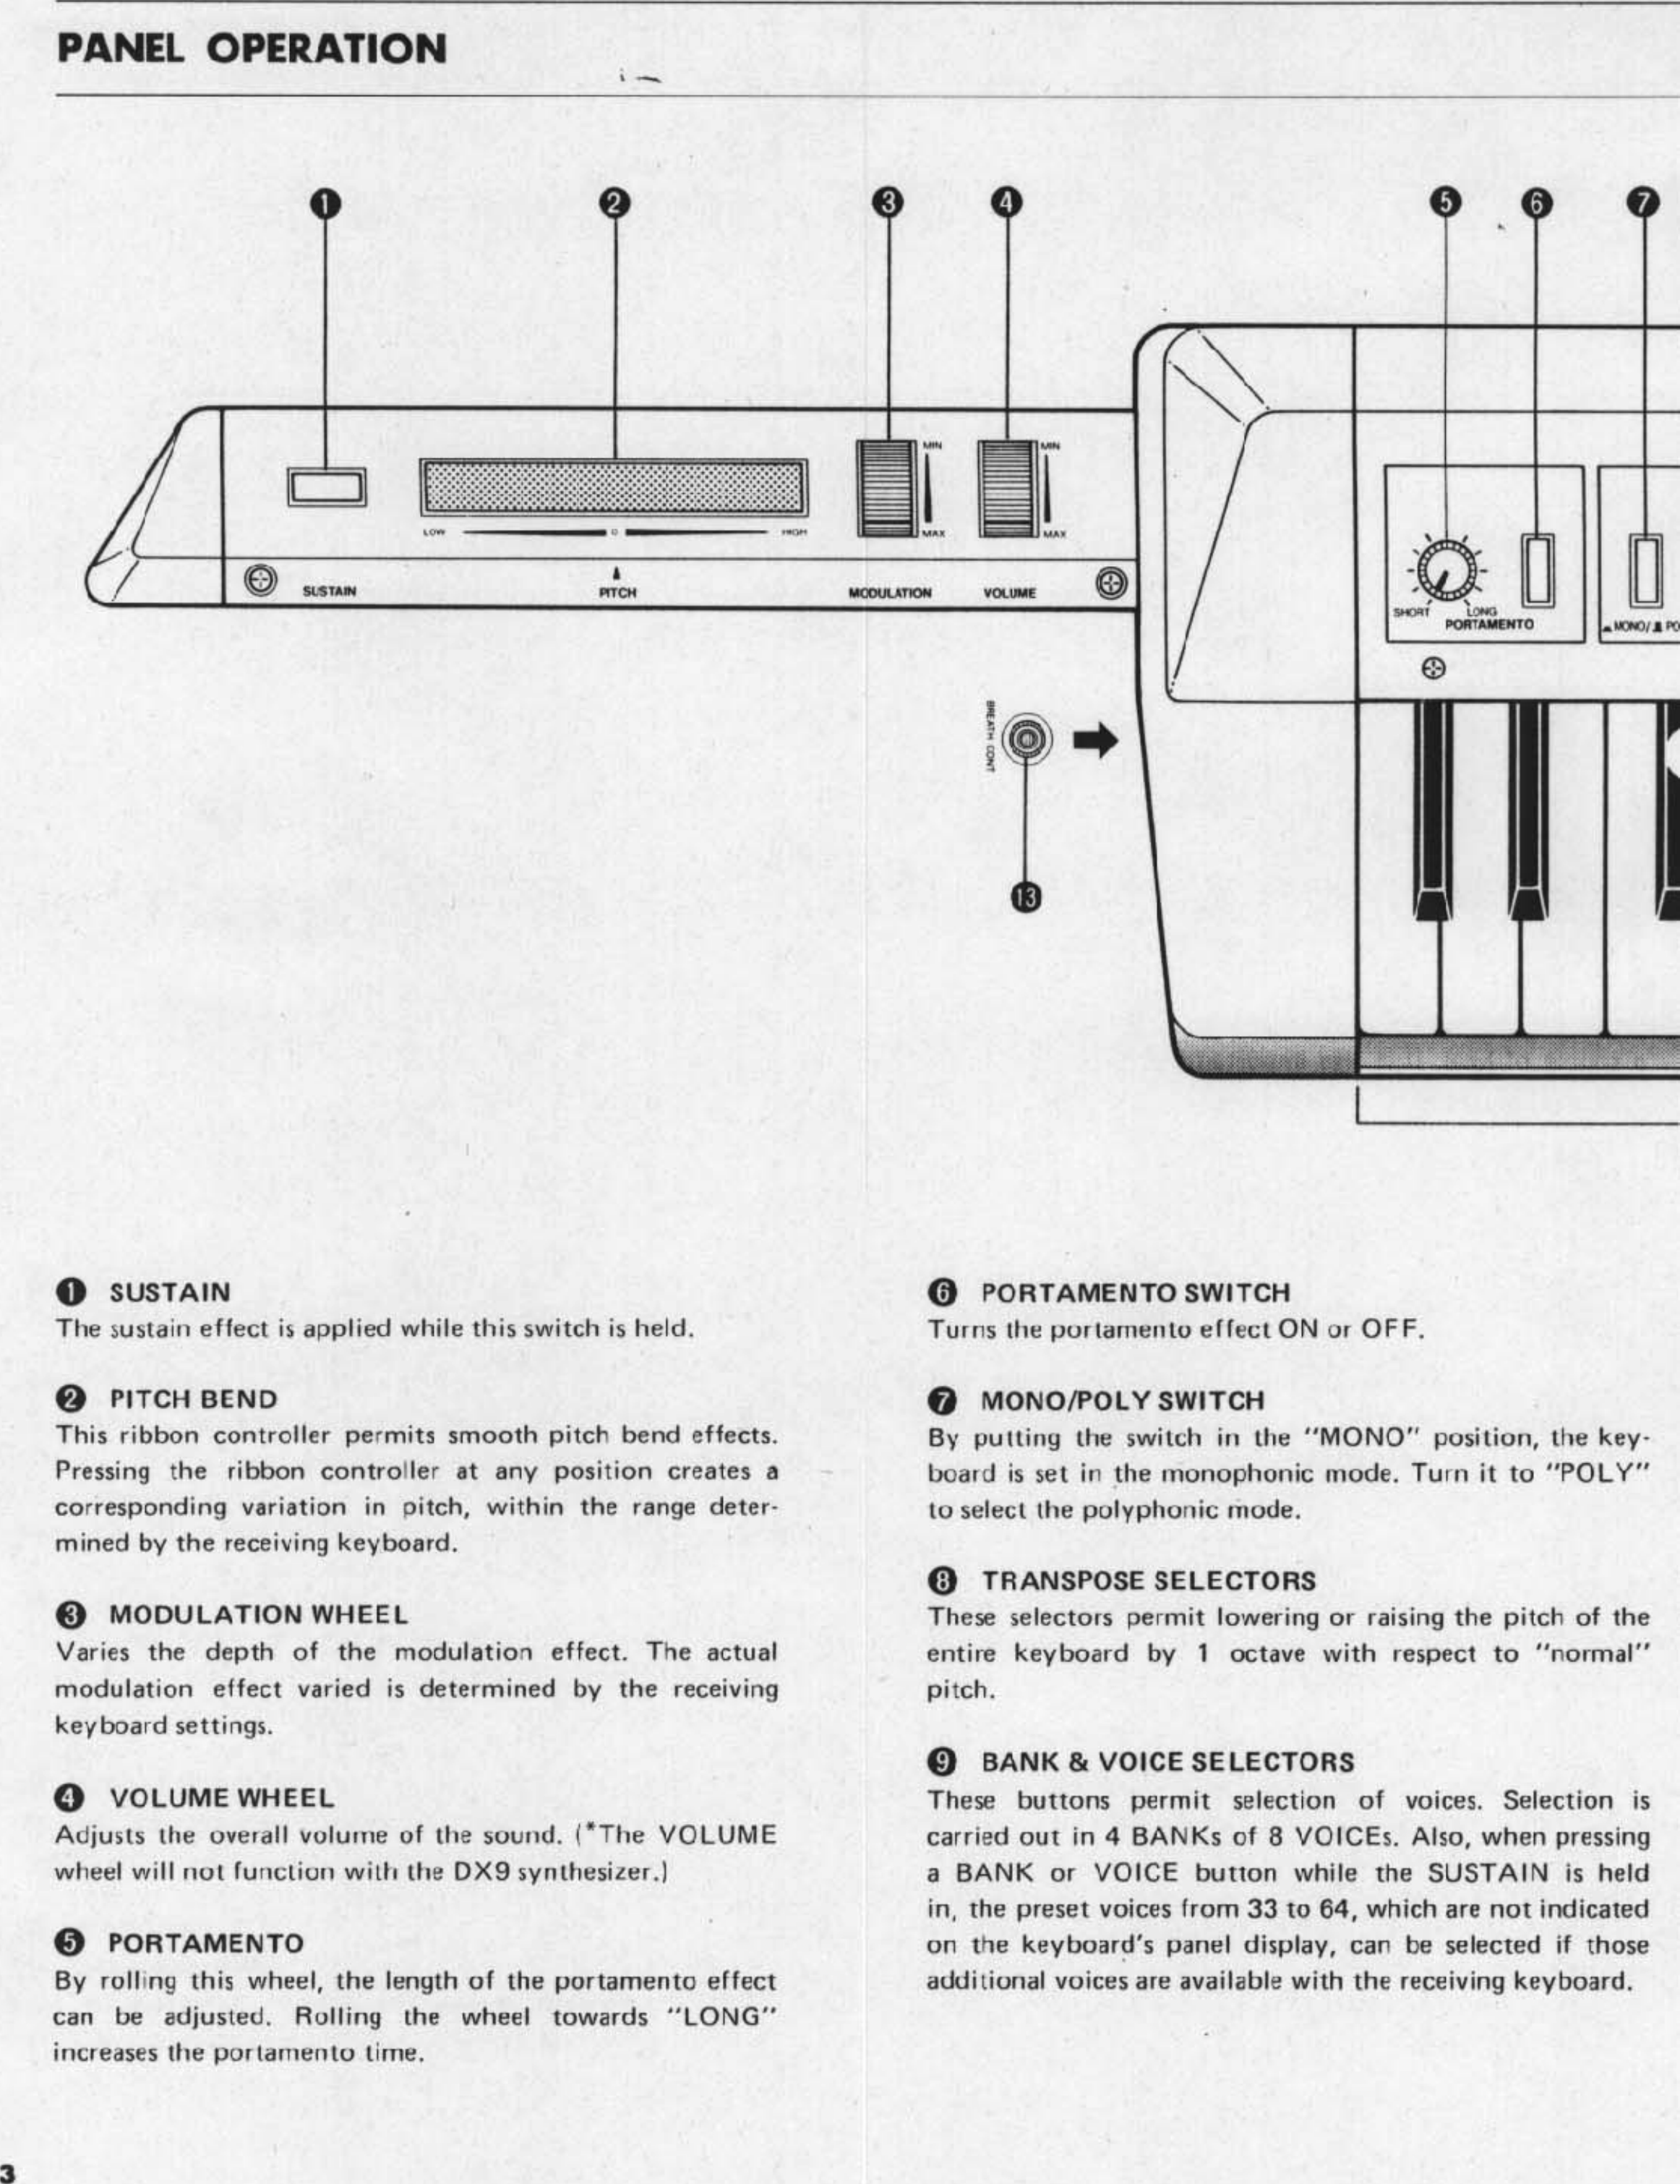 Page 4 of 8 - Yamaha  KX5 Owner's Manual (Image) KX5E